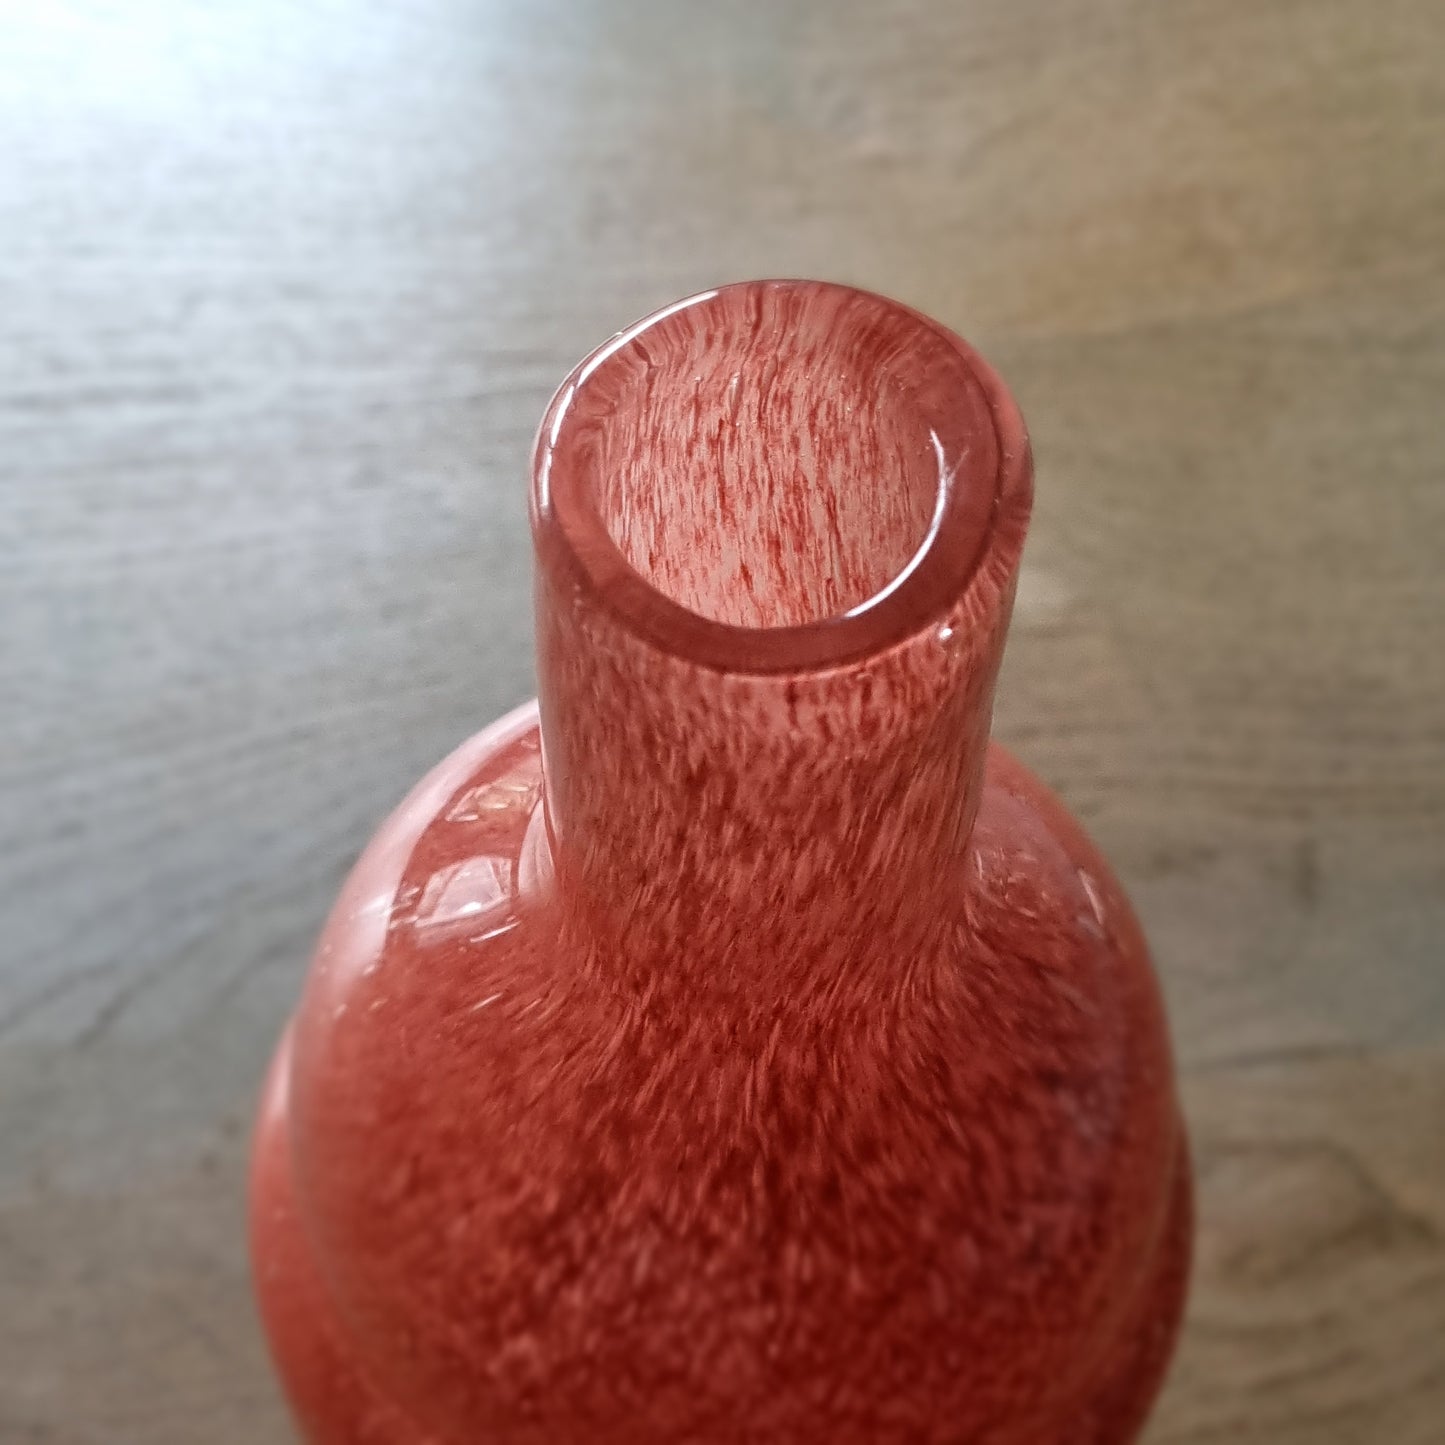 Vaas roze glas met luchtbelletjes in het glas